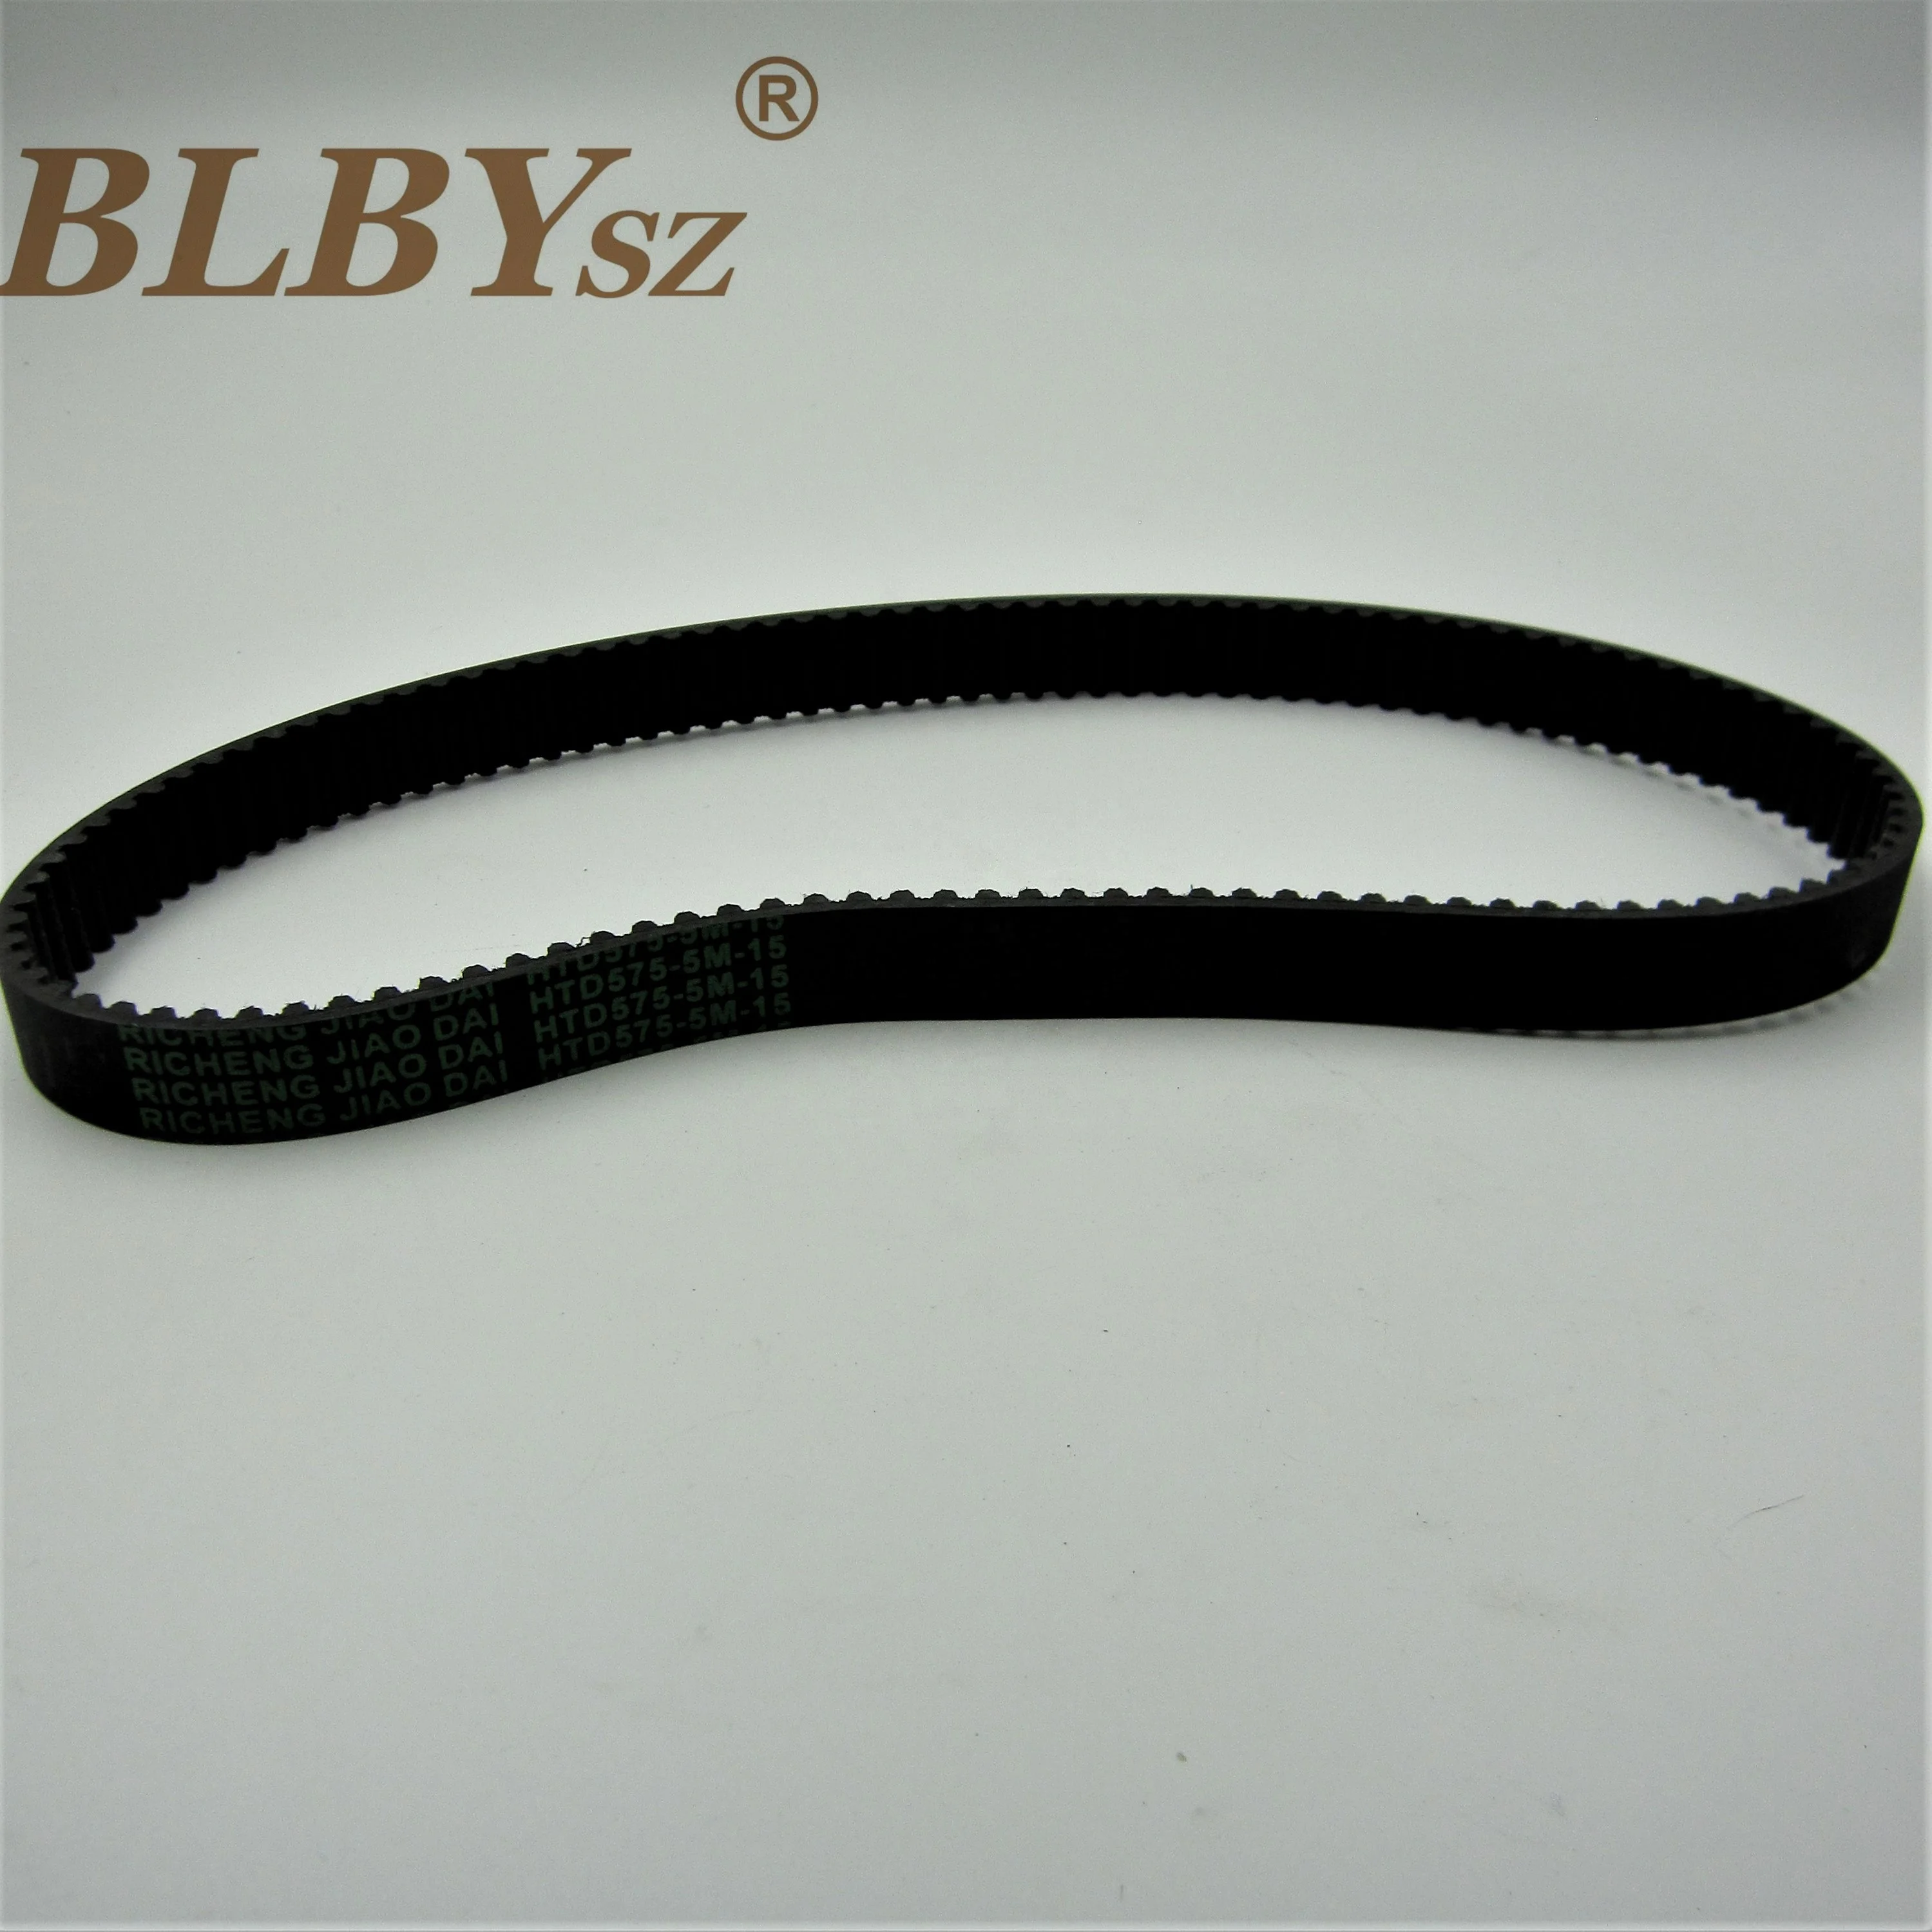 High Quality Blbysz -5m-15 Timing Belt For Sewing Machine - Buy .